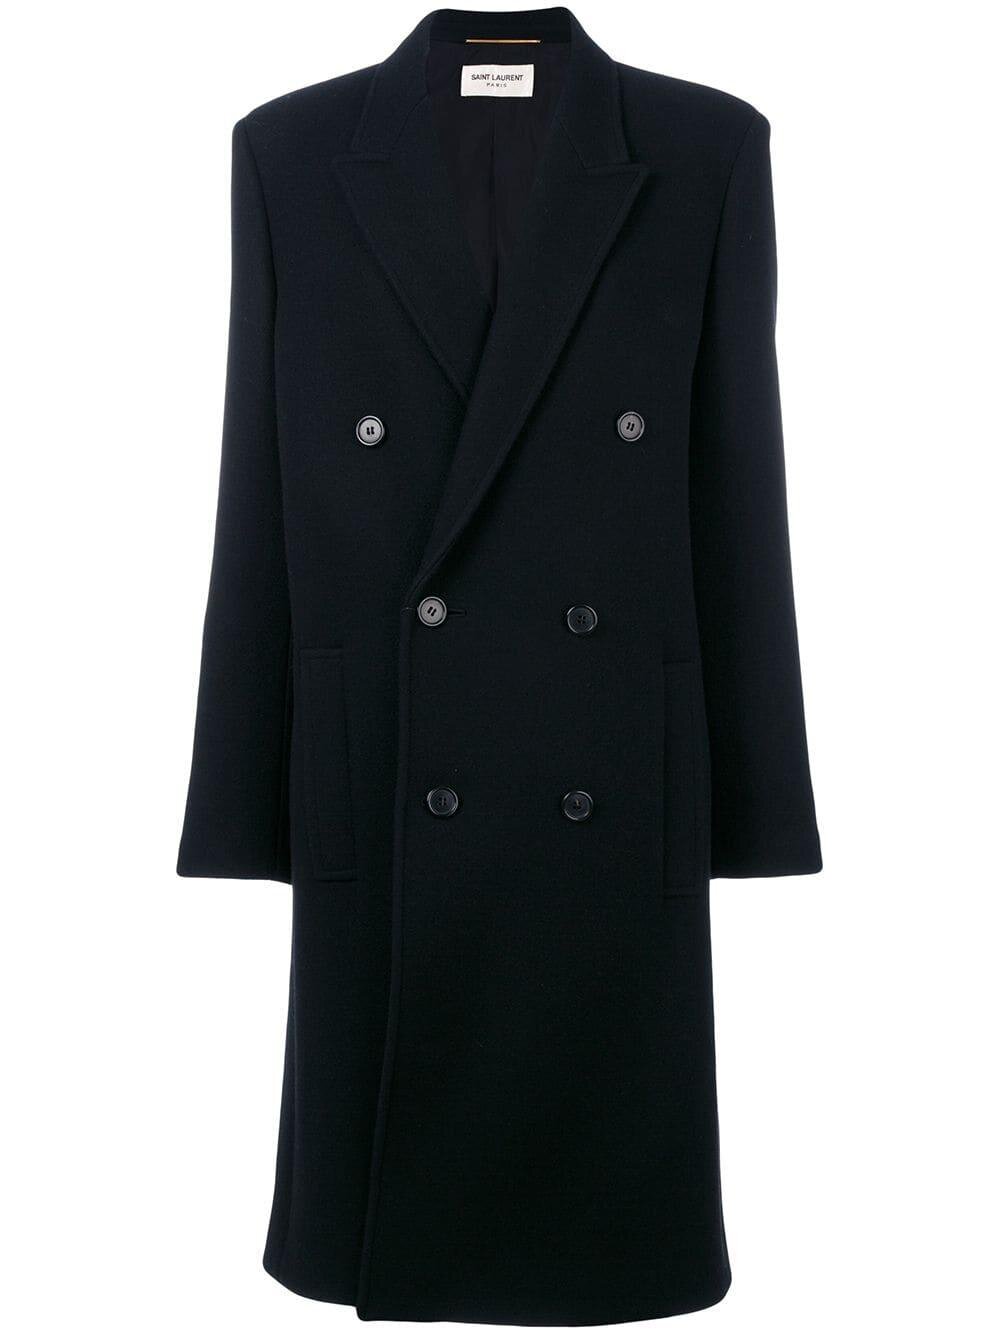 Saint Laurent Double-Breasted Coat in Black.jpg